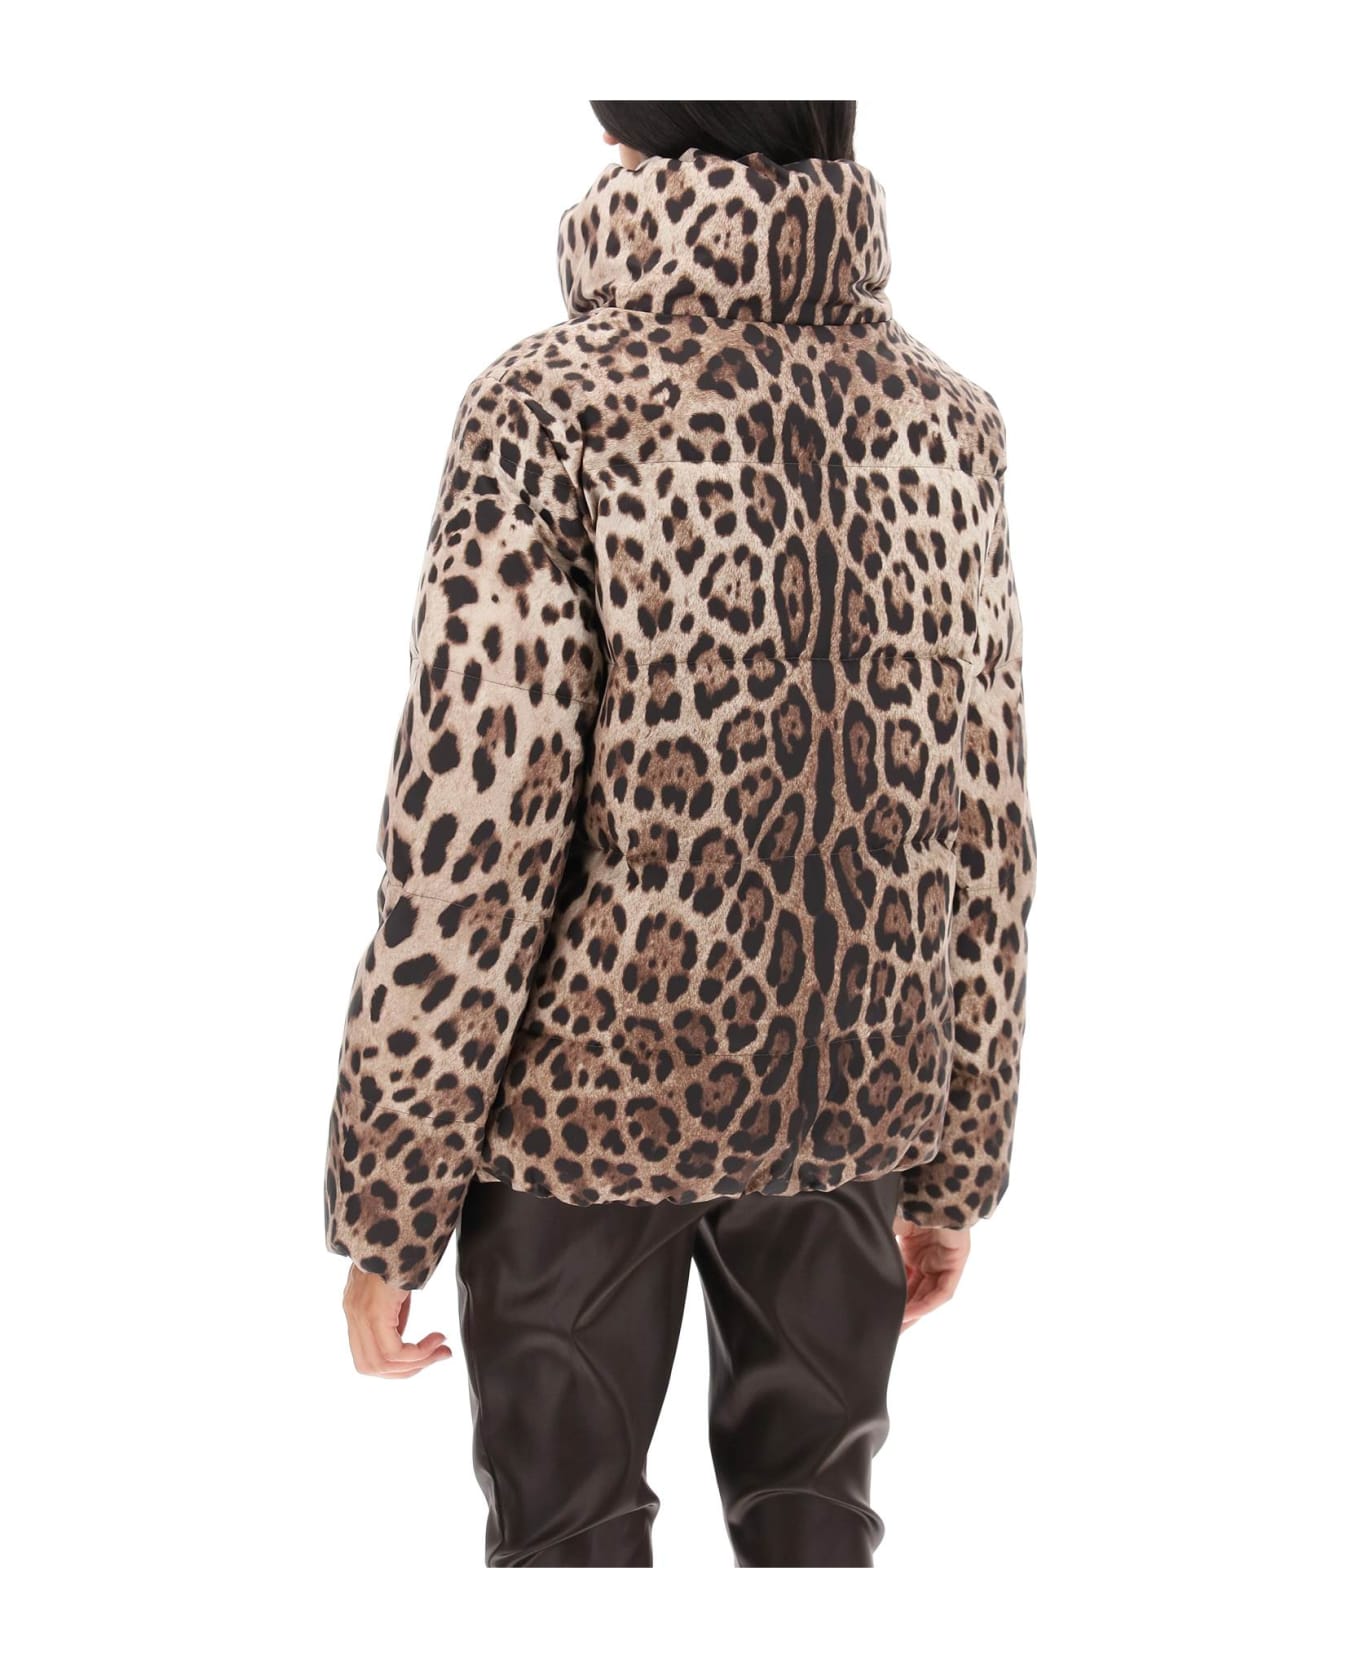 Dolce & Gabbana Leopard Print Padded Jacket - Beige